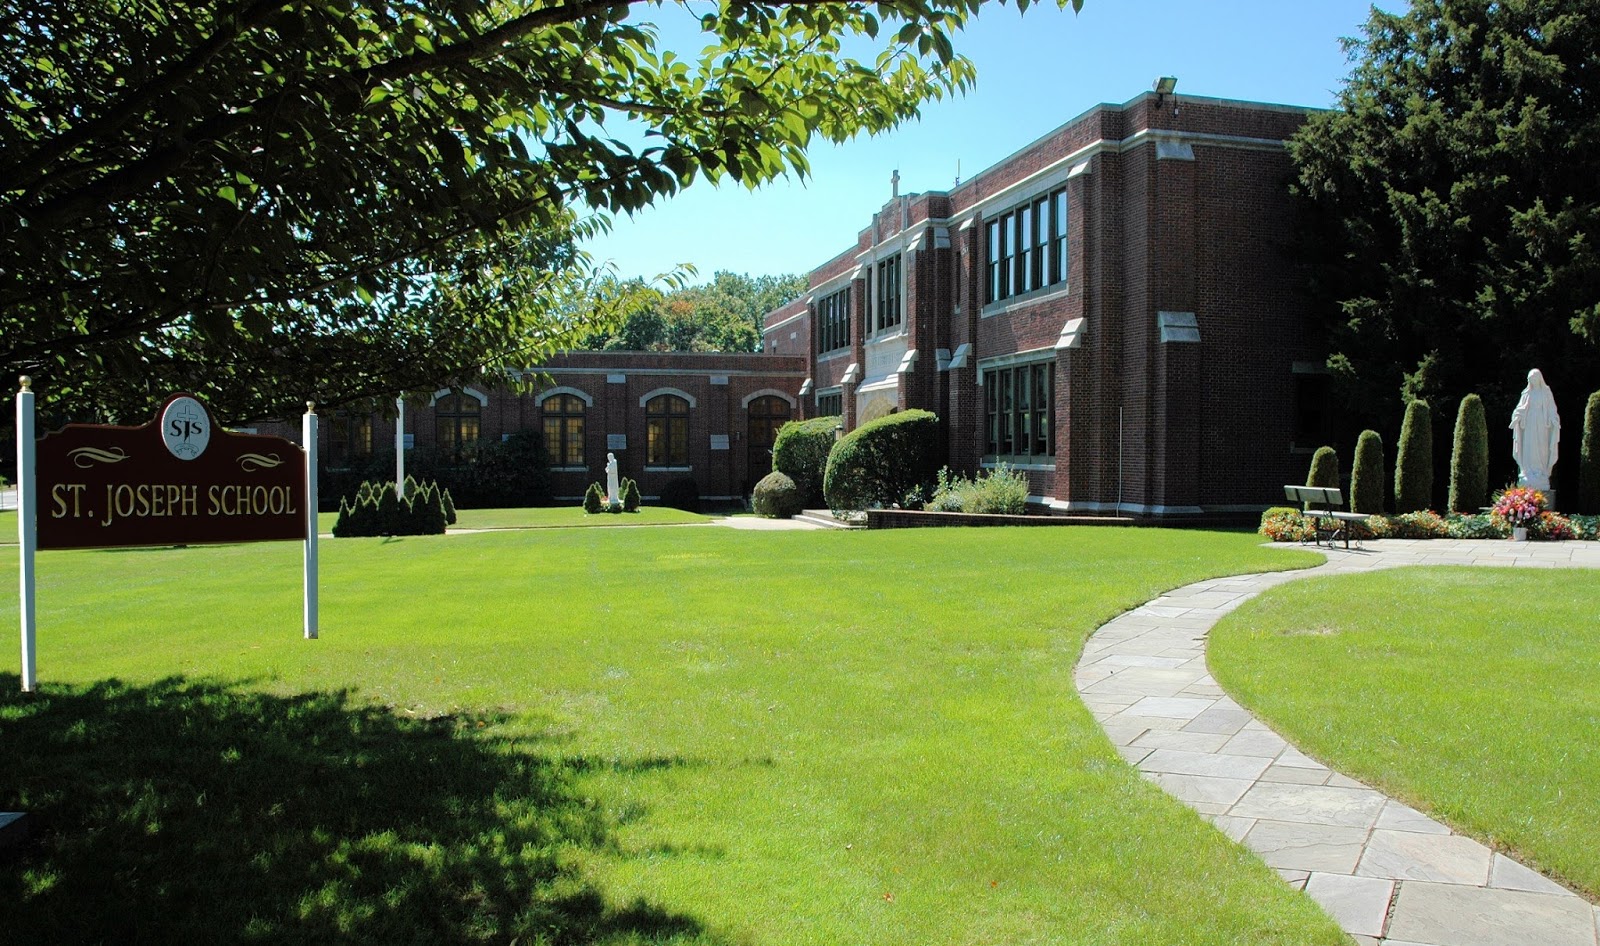 Photo of St Joseph's School in Garden City, New York, United States - 1 Picture of Point of interest, Establishment, School